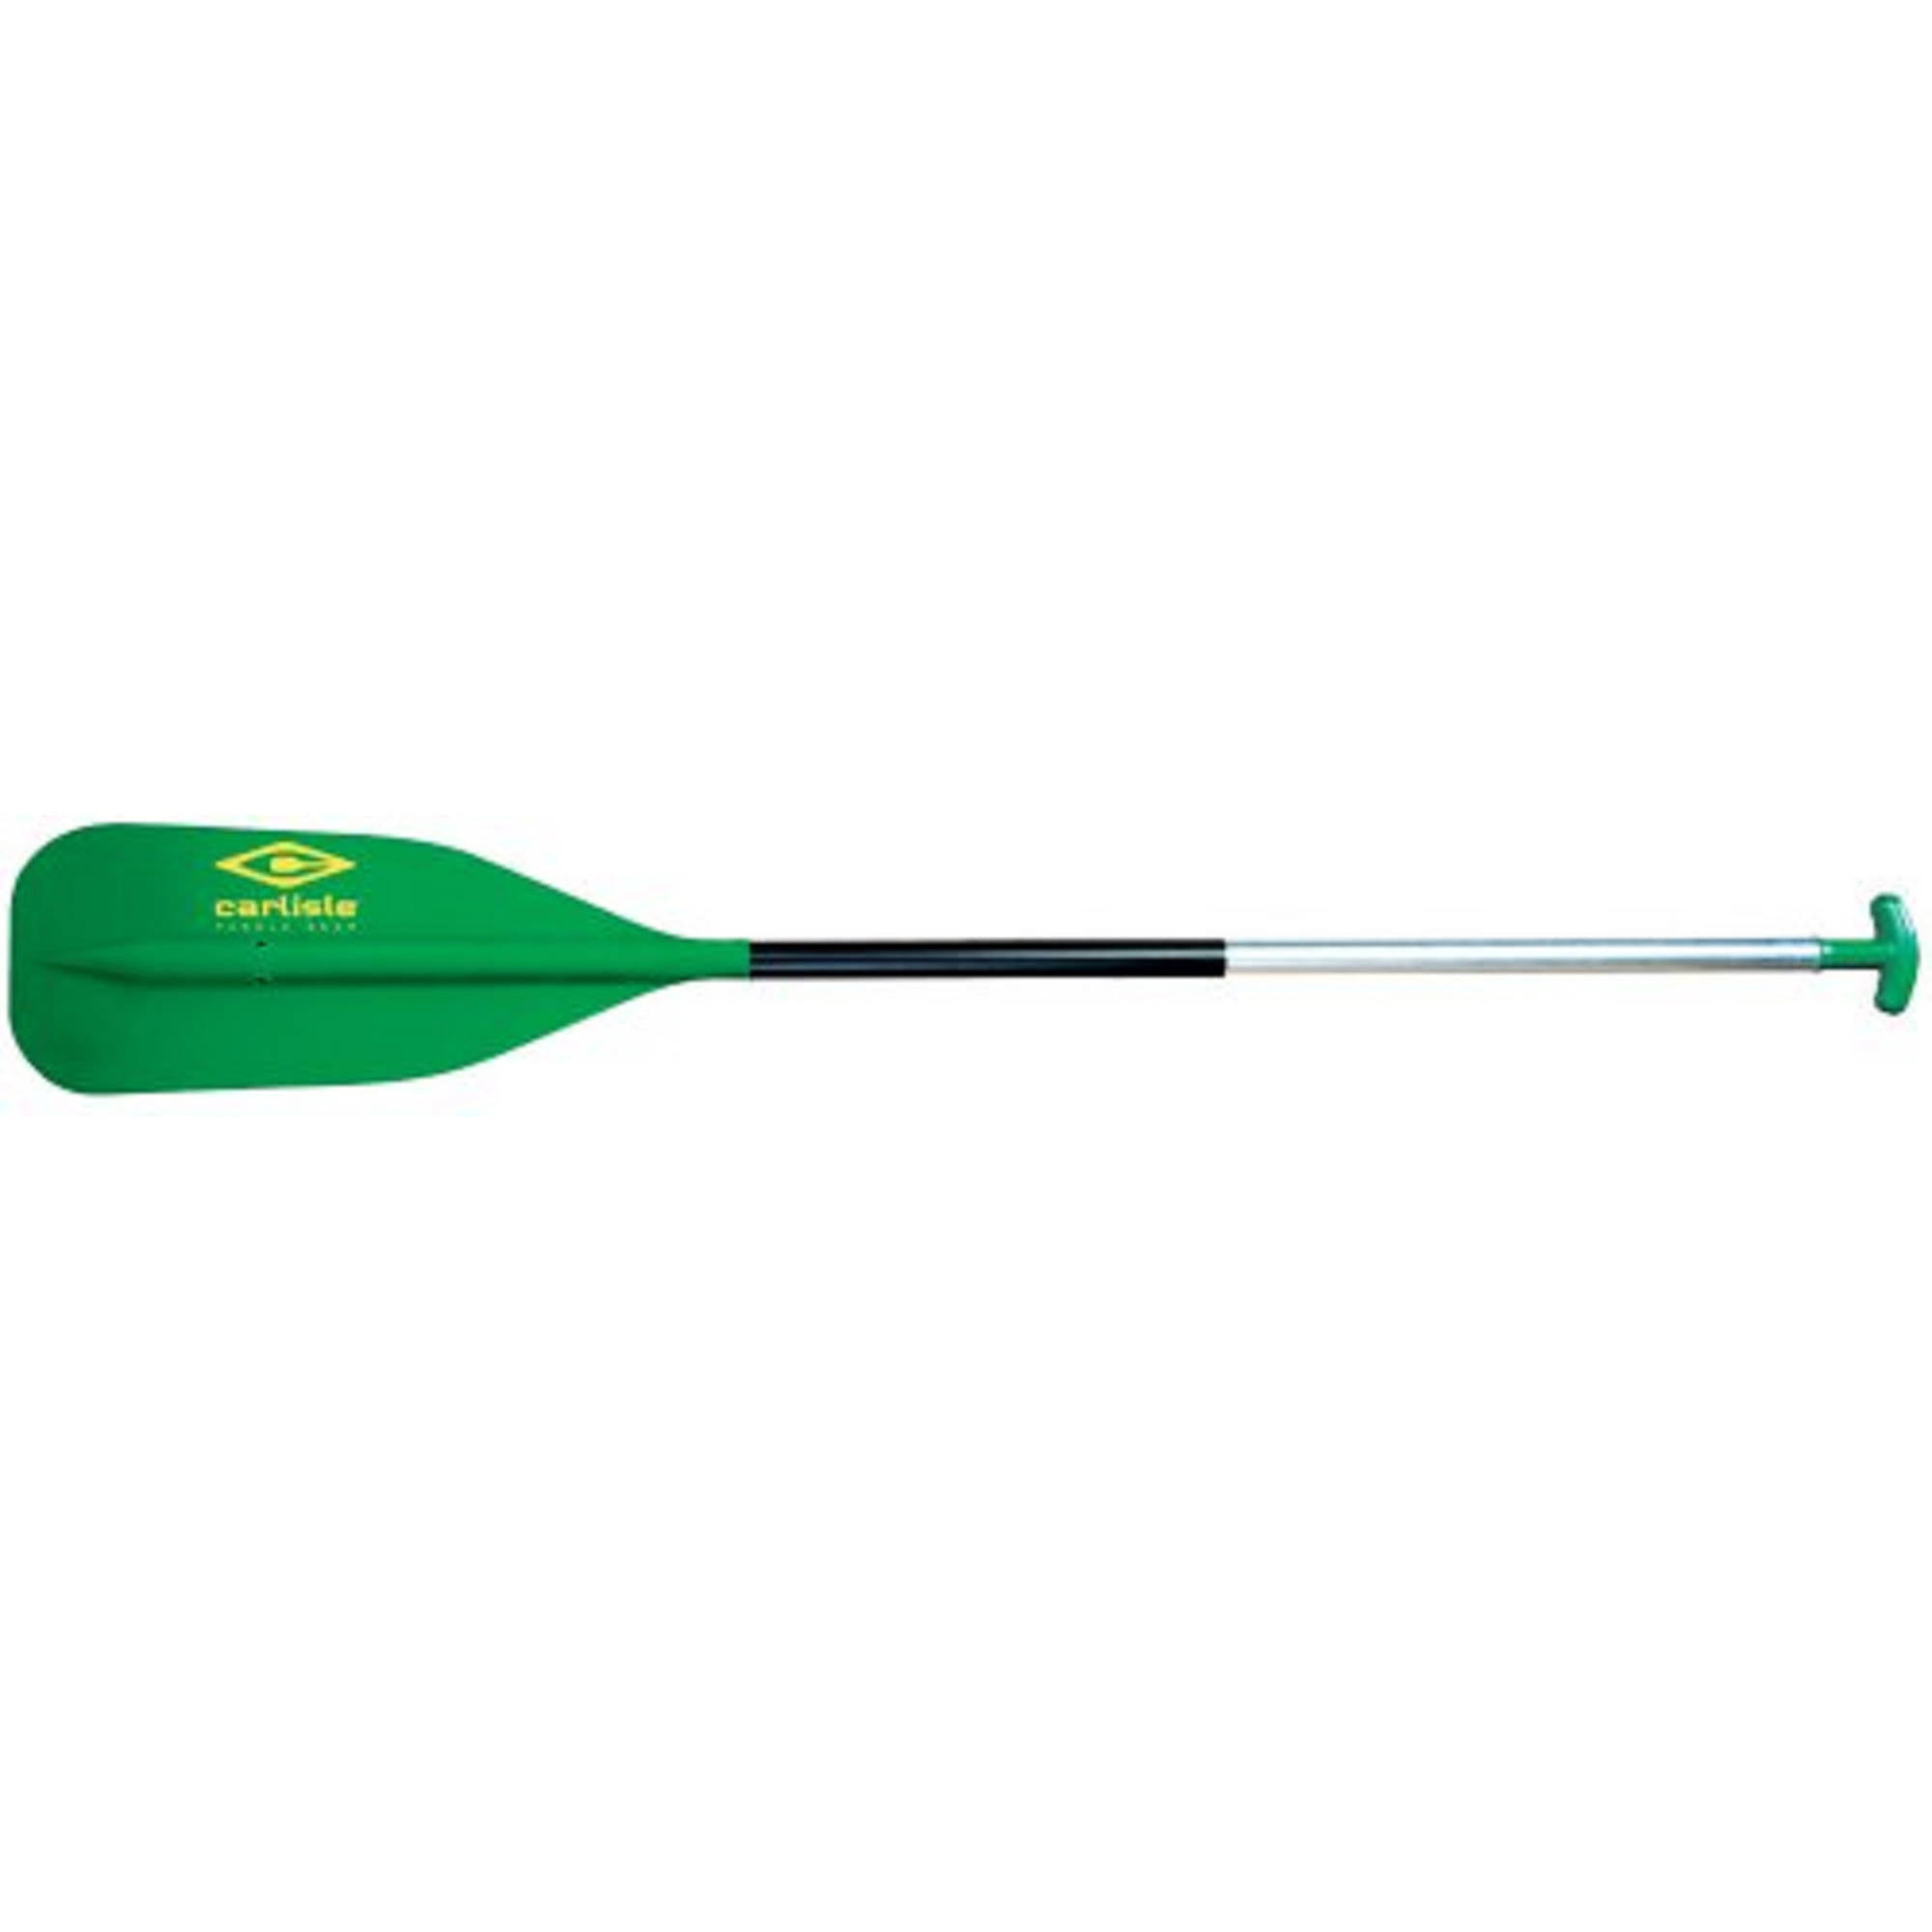 carlisle economy t-grip plastic canoe paddle, green